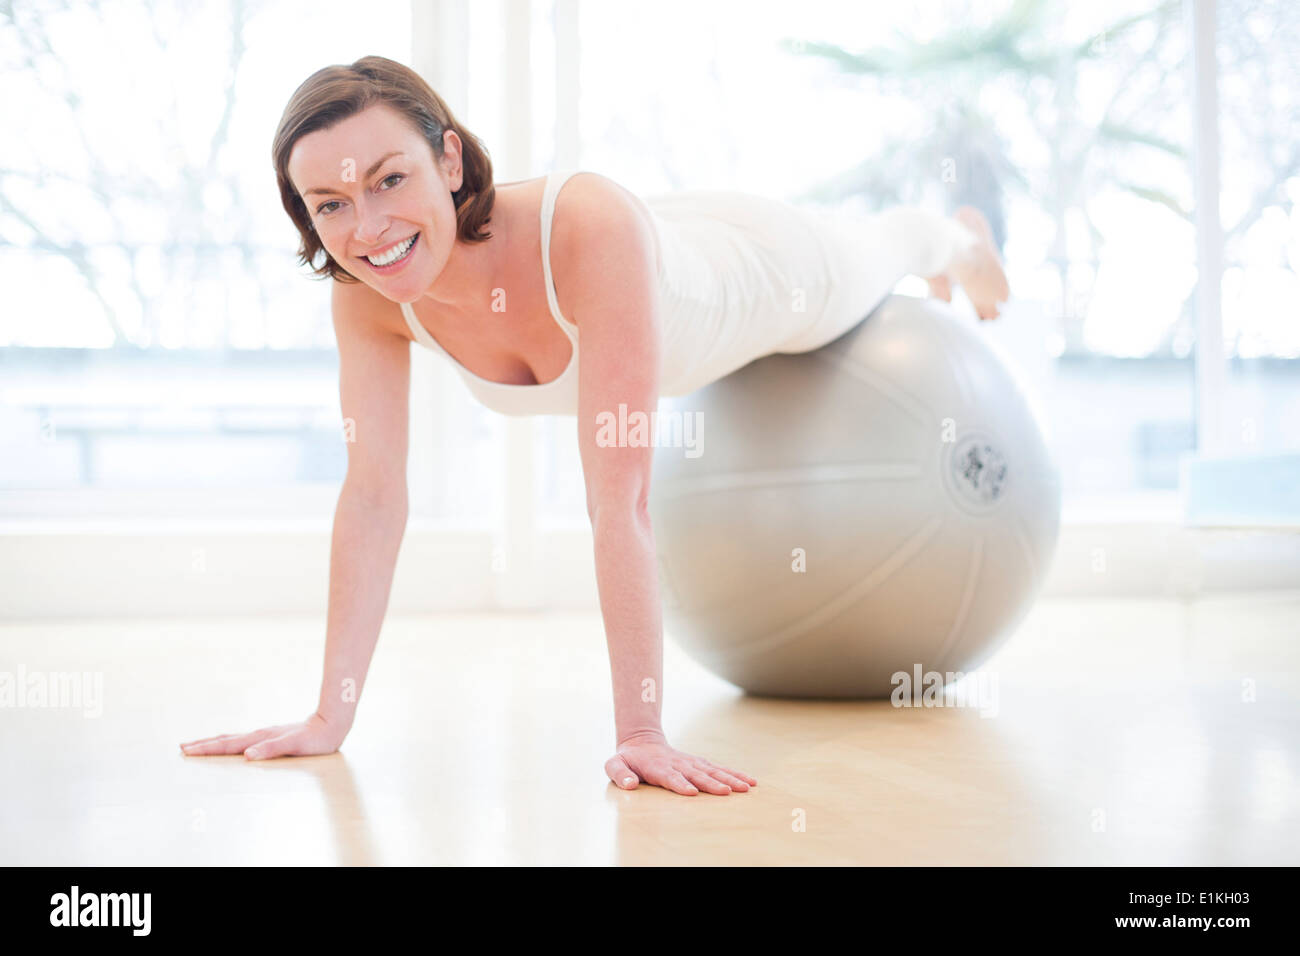 MODEL Release Frau balancieren auf einem Gymnastikball. Stockfoto